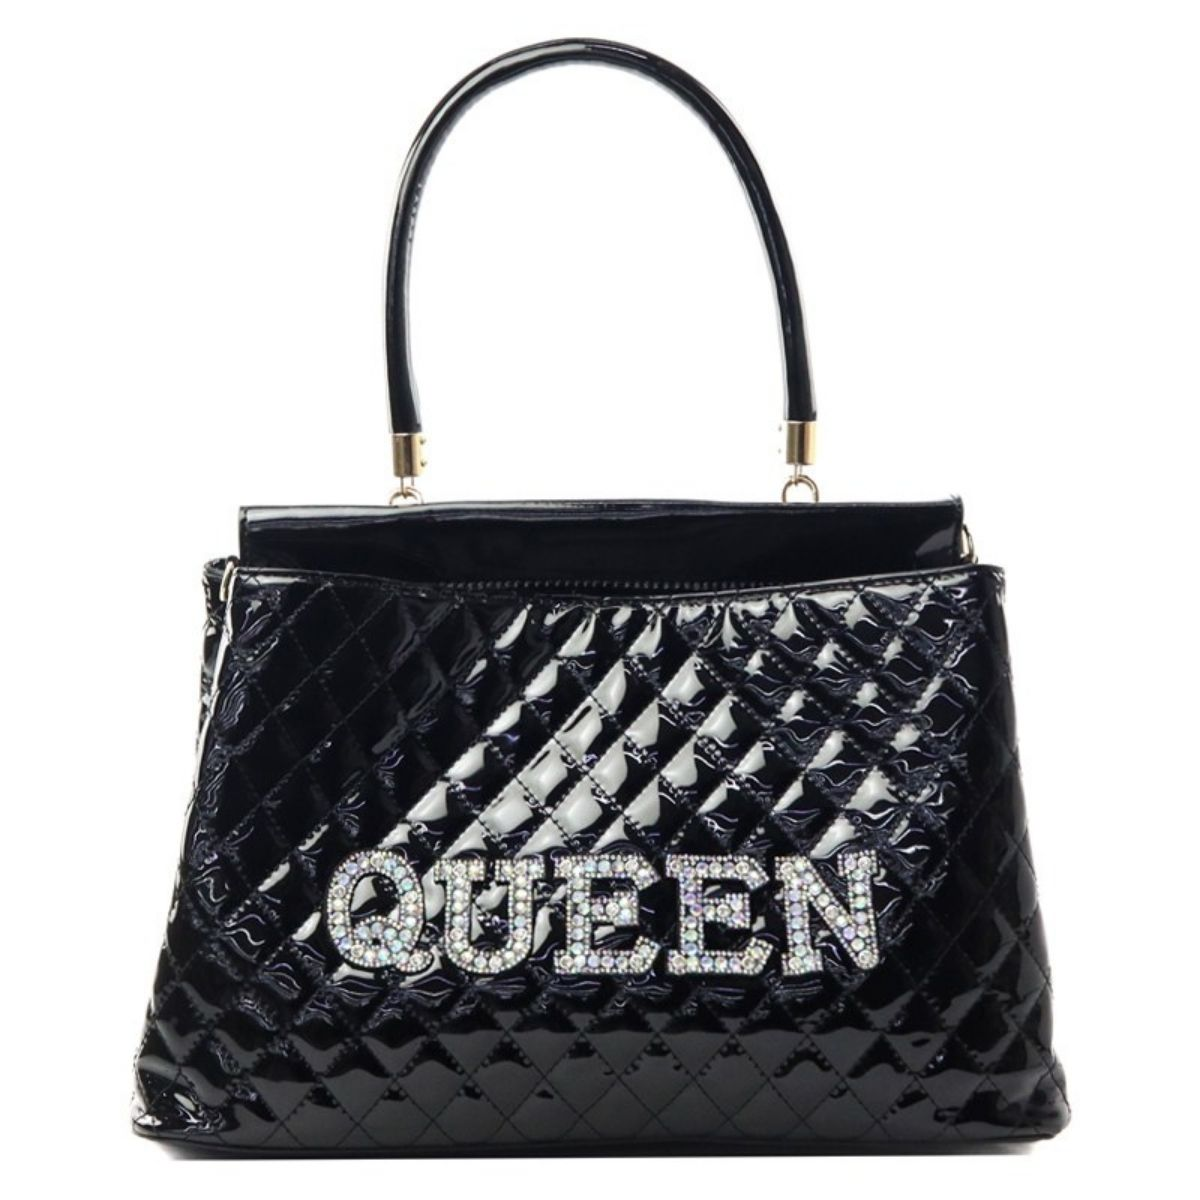 Black Quilted Queen Tote Handbag